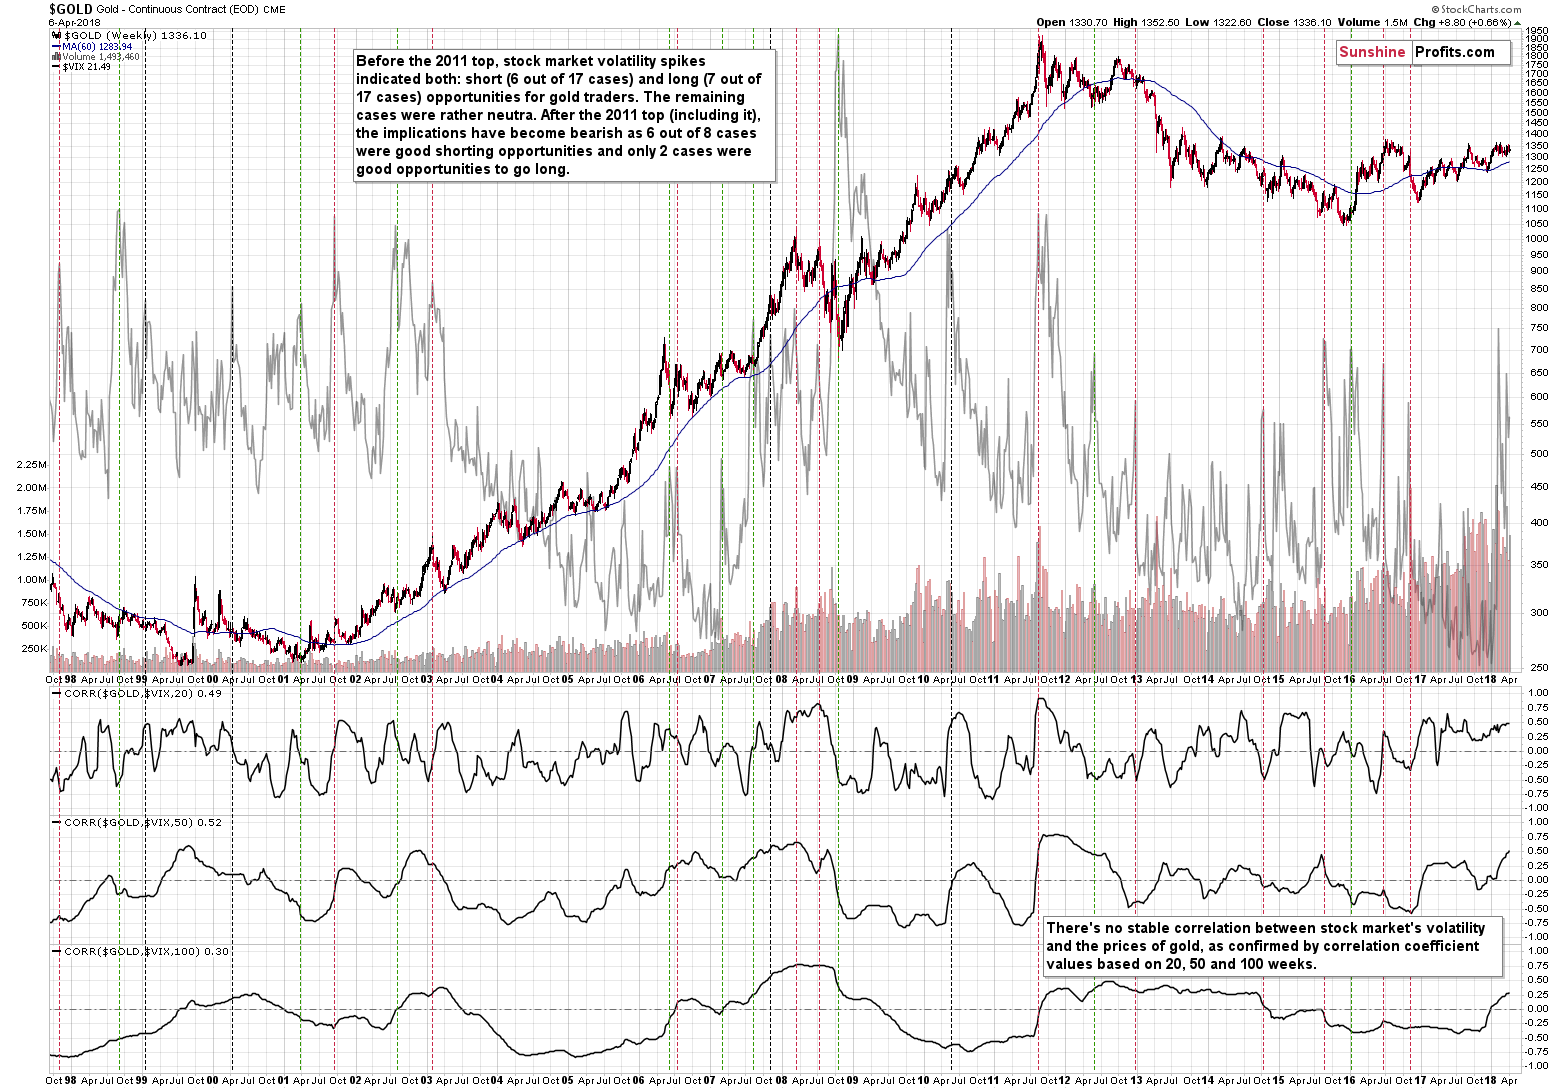 Gold and VIX - long-term chart